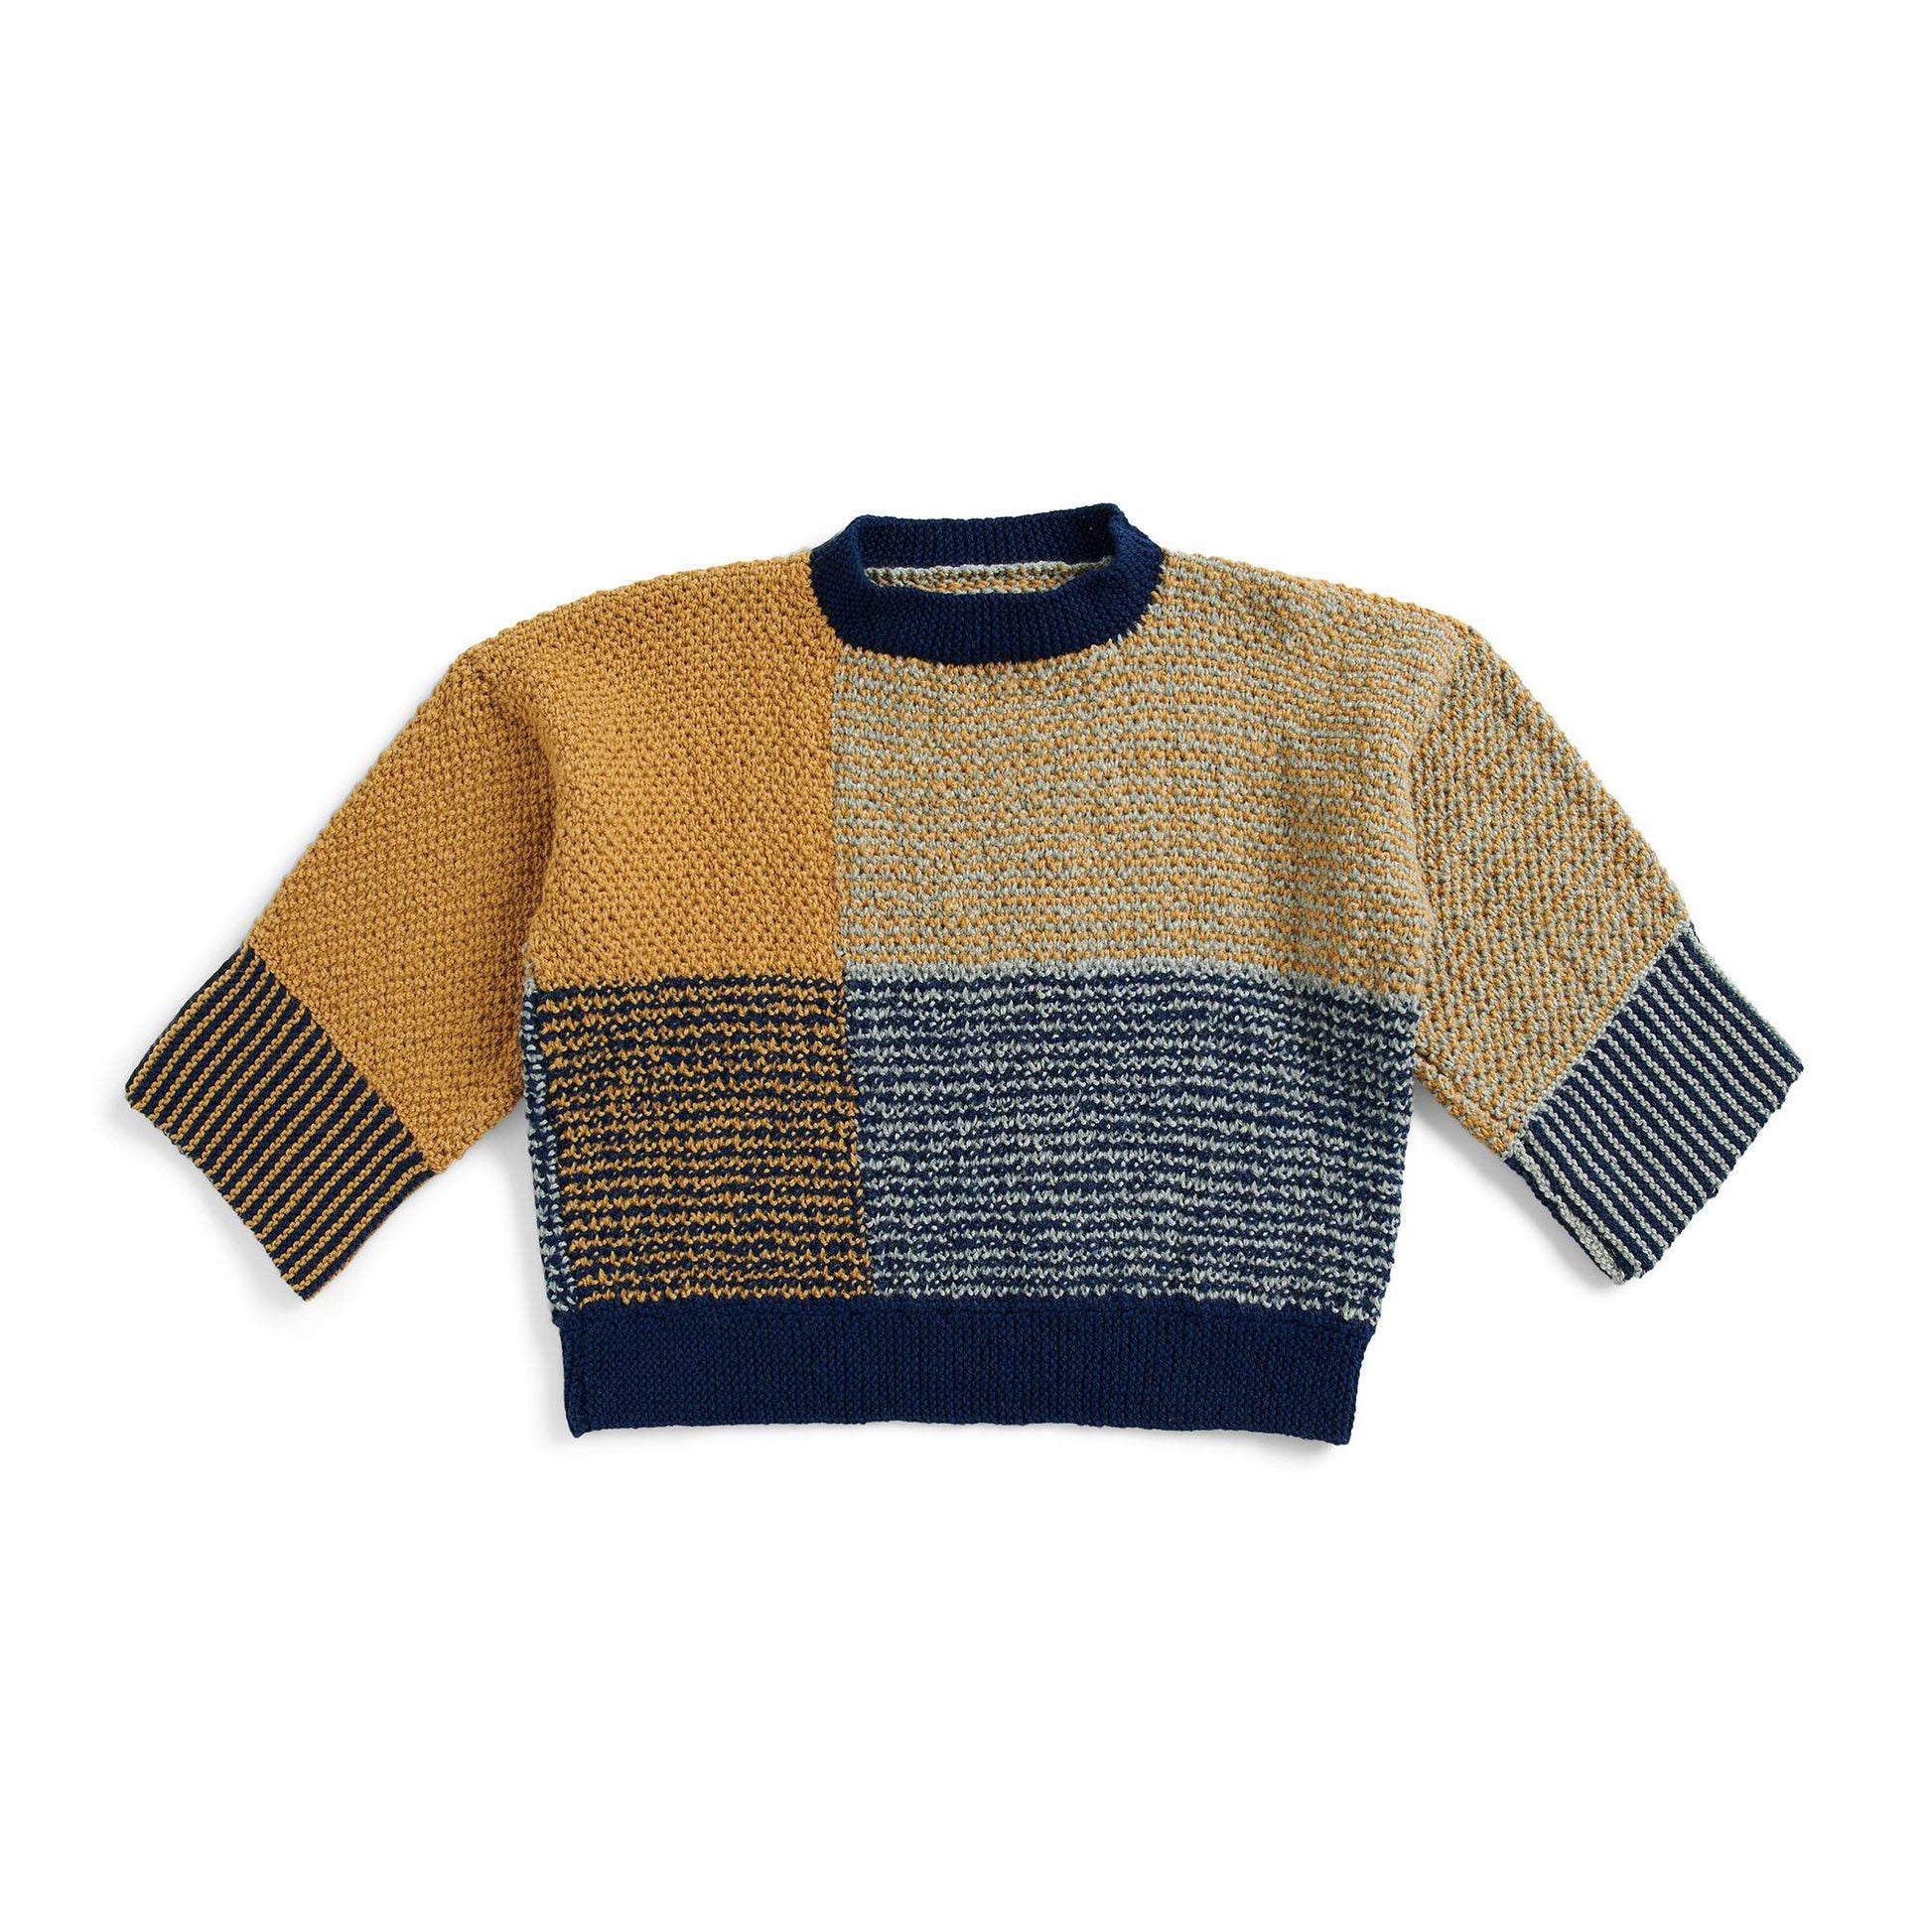 Free Patons Blocked Cropped Sweater Knit Pattern